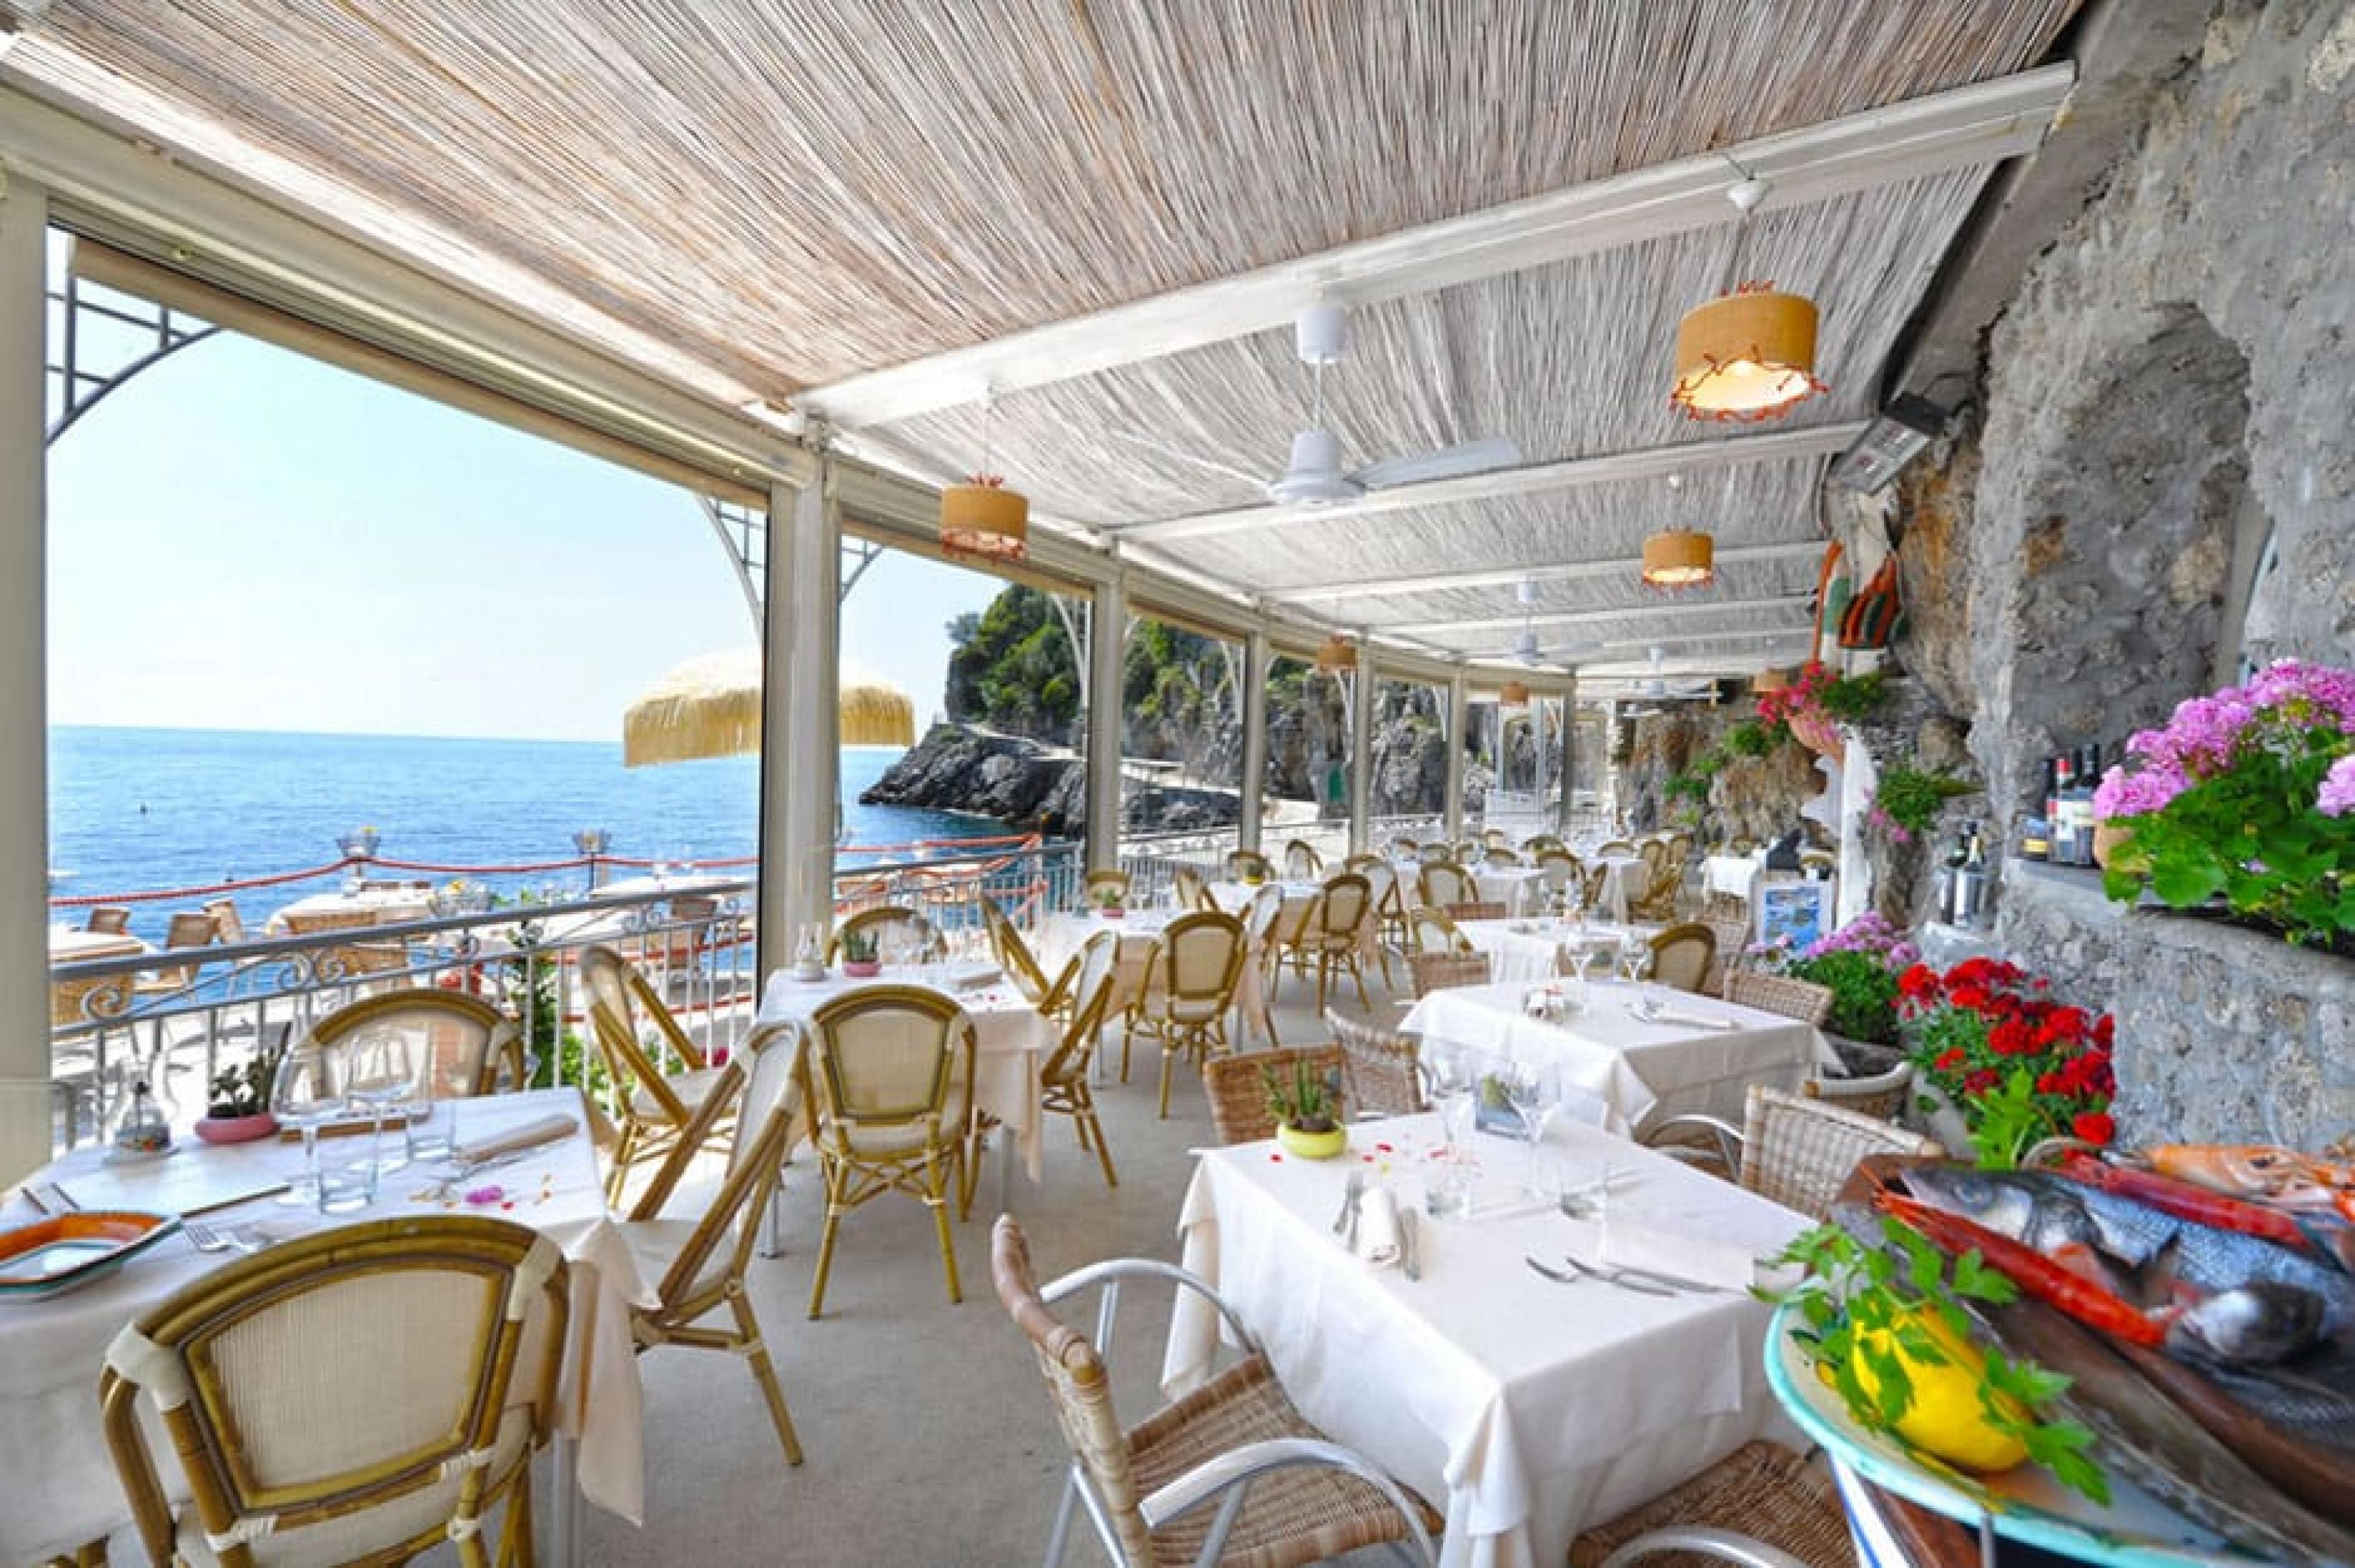 Dinning Area at Il Pirata, Amalfi Coast, Italy